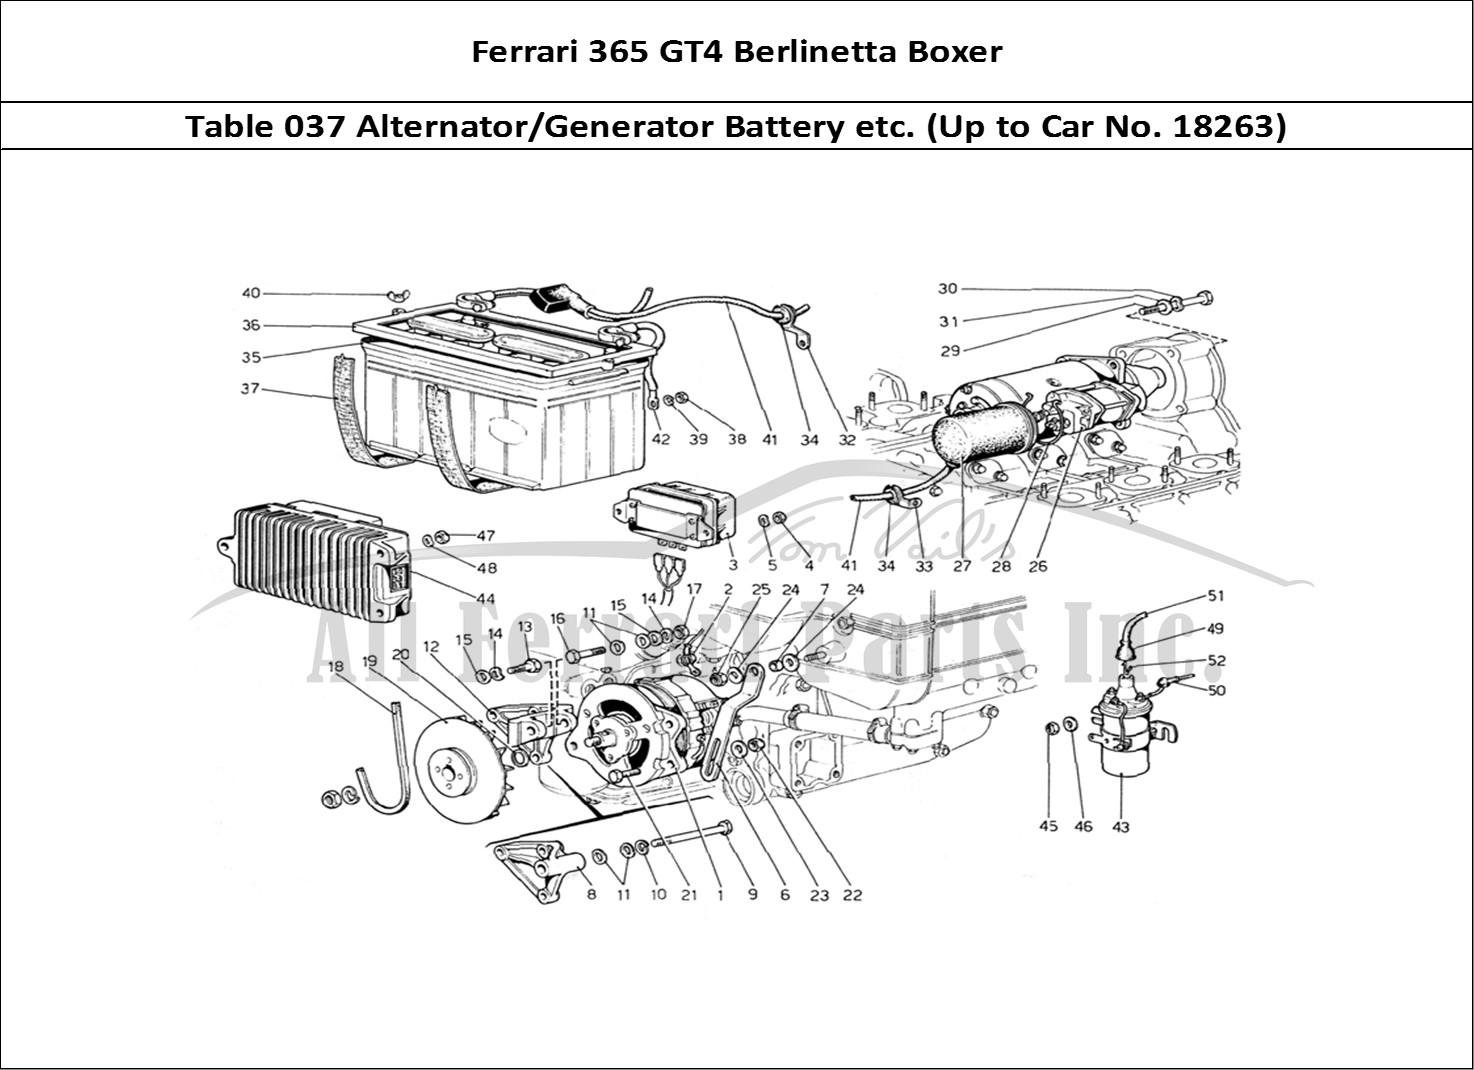 Ferrari Parts Ferrari 365 GT4 Berlinetta Boxer Page 037 Current Generation (Up To